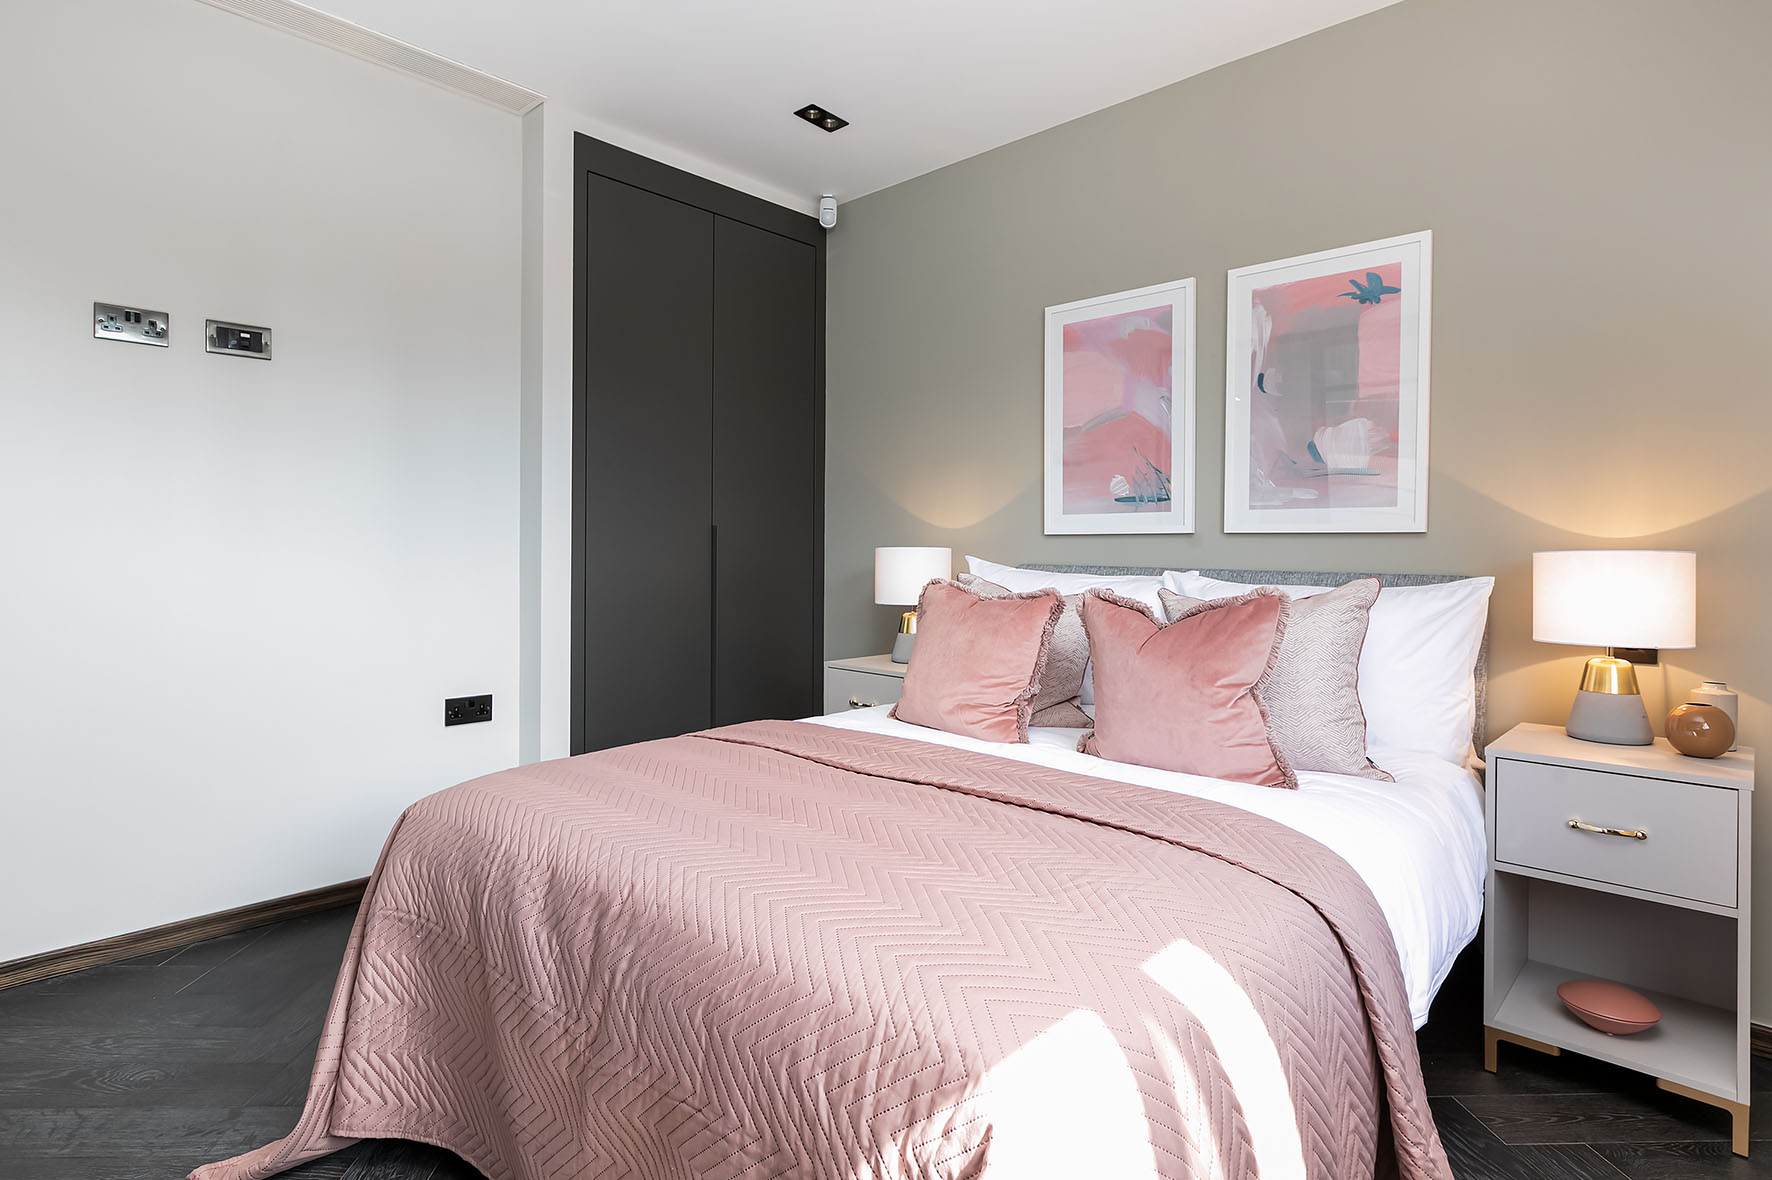 Lovelydays luxury service apartment rental - Soho - Great Marlborough St VIII - Lovelysuite - 3 bedrooms - 3 bathrooms - Queen bed - 5 star serviced apartments in london - 259556f575aa - Lovelydays